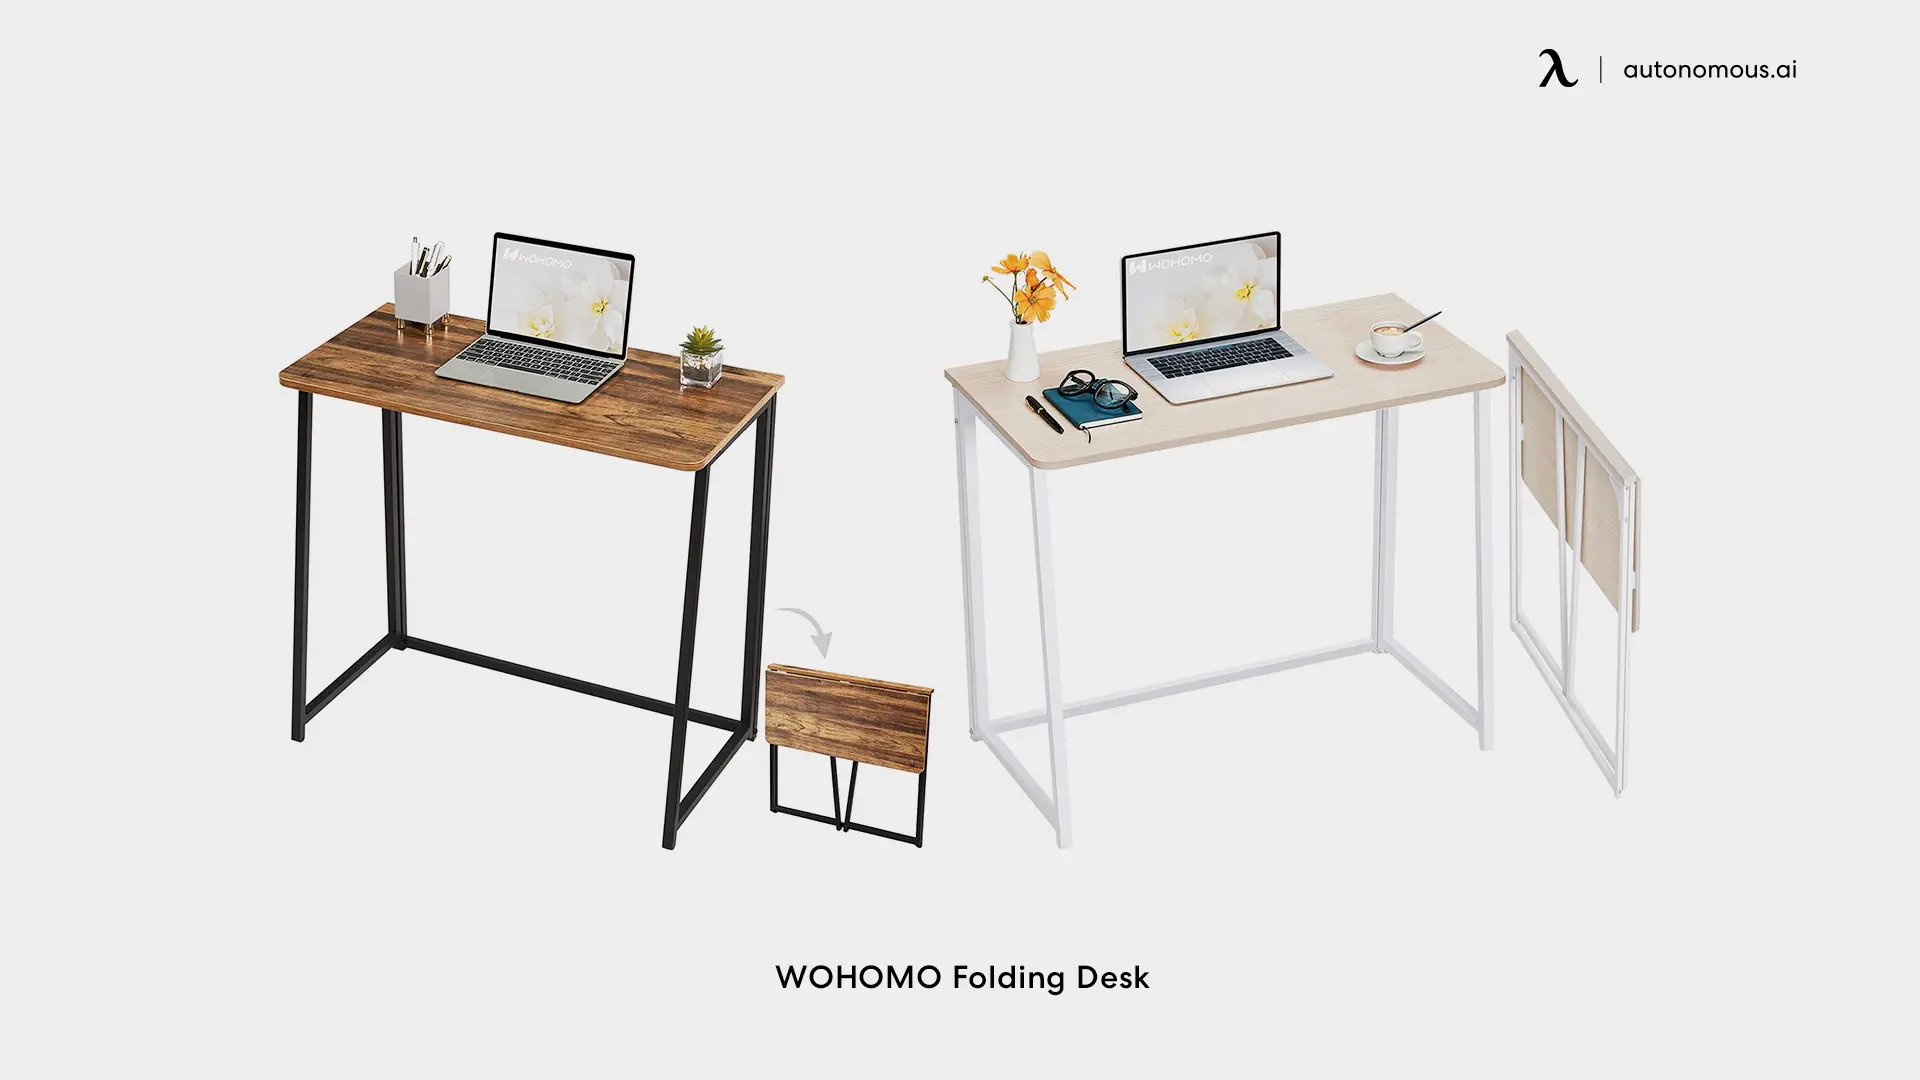 WOHOMO Folding Desk - small white desk